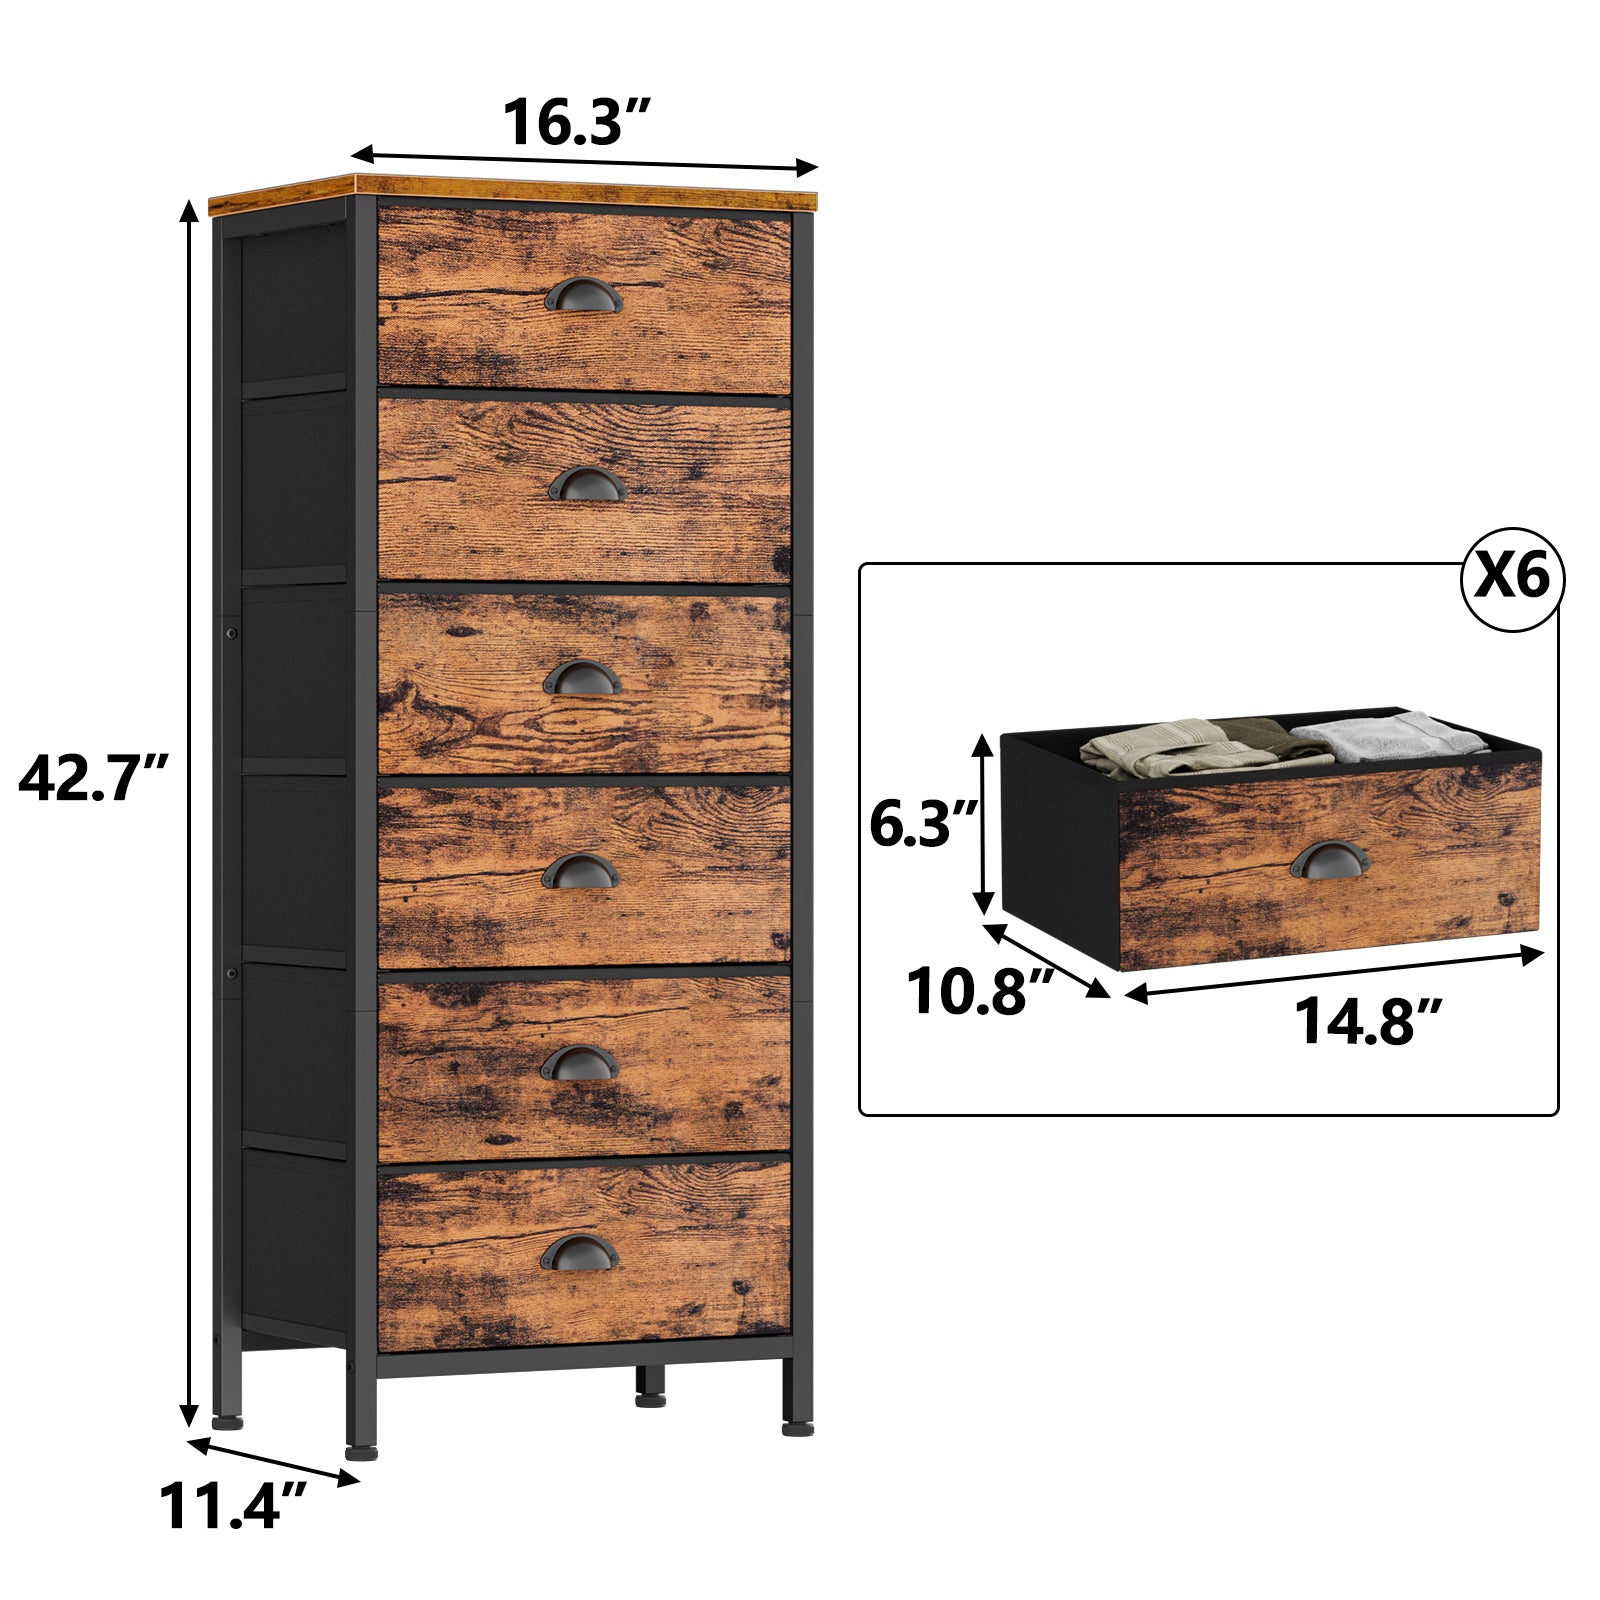 Furnulem 6-Drawer Dresser, Vertical Storage Organizer